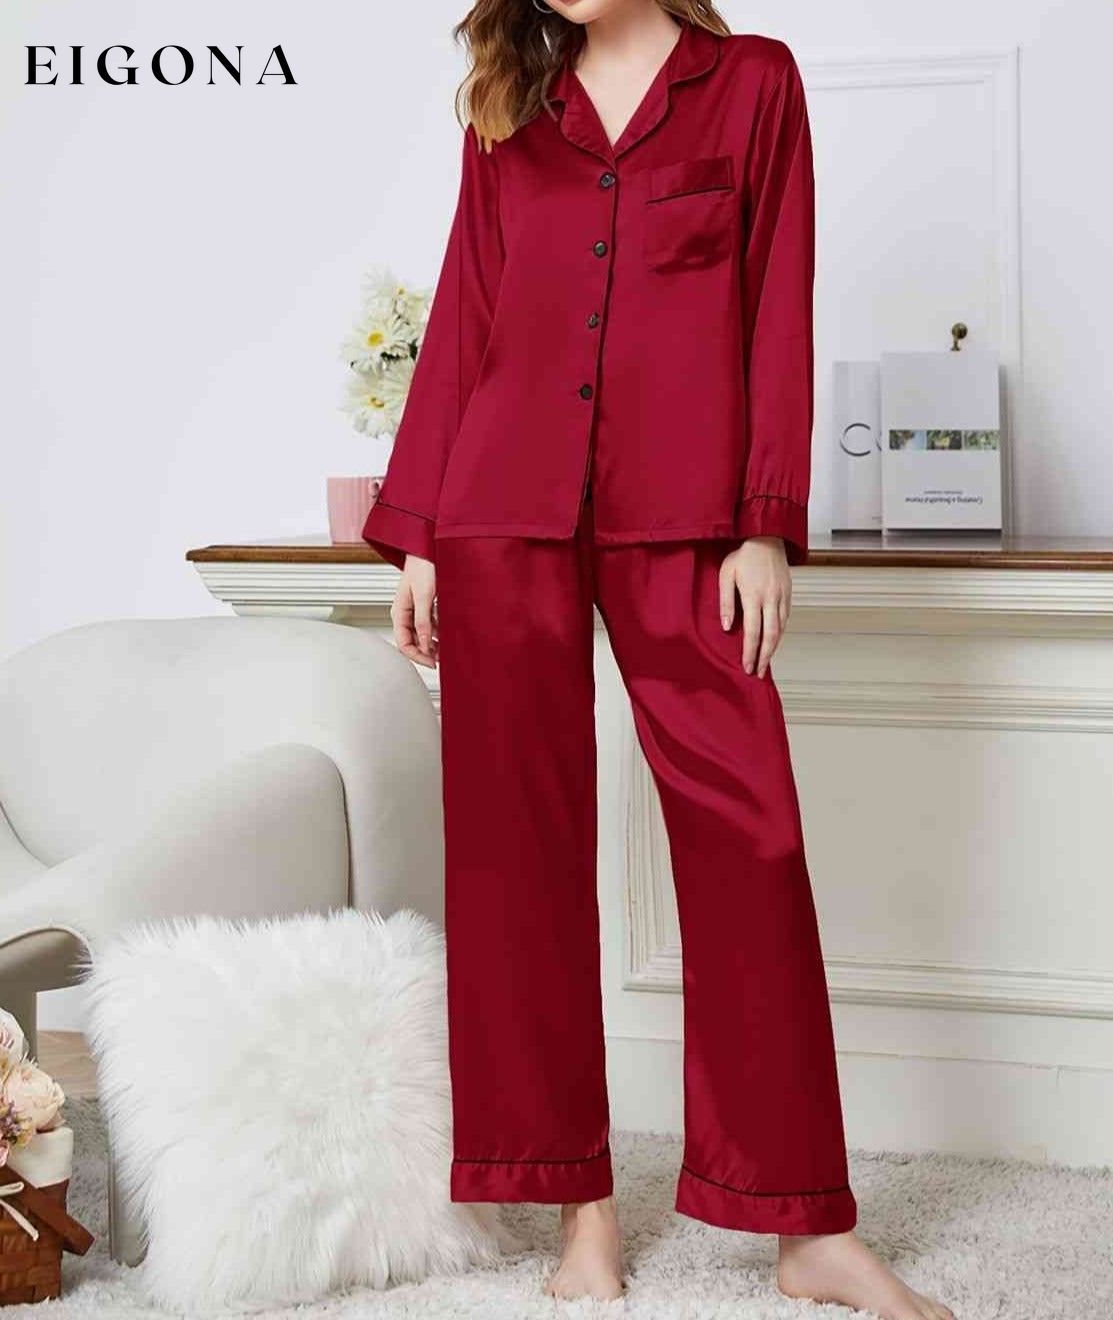 Lapel Collar Long Sleeve Top and Pants Pajama Set Deep Red clothes Daniel.L lounge wear loungewear pajamas Ship From Overseas